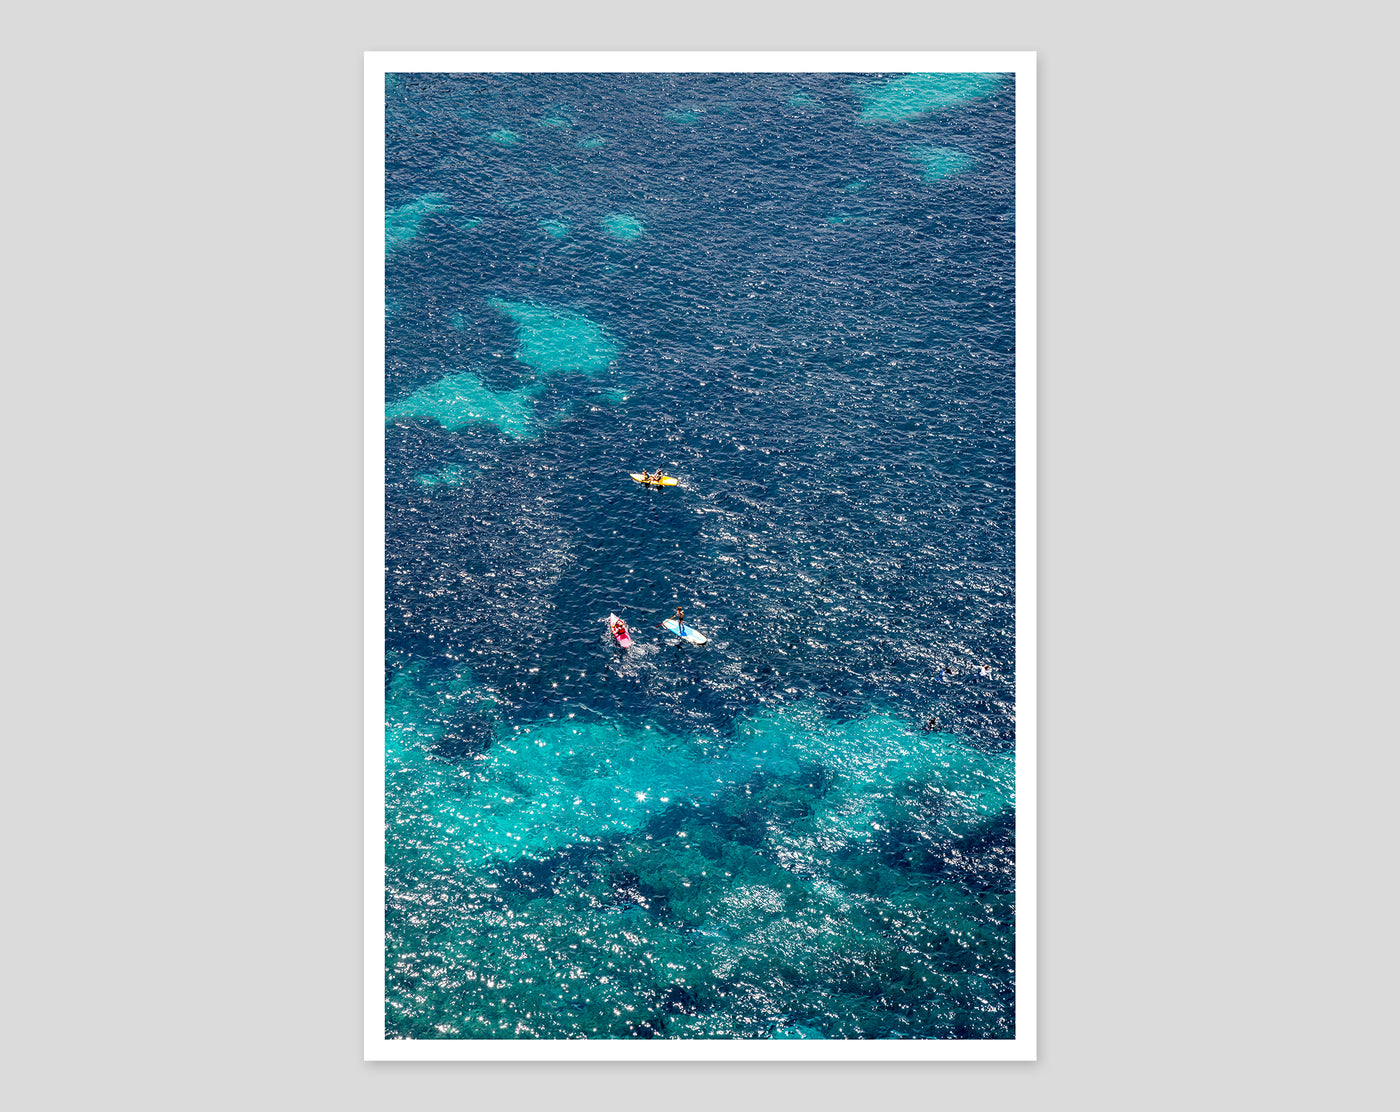 Cote d'Azur - Mediterranean Sea aerial art print by Cattie Coyle Photography